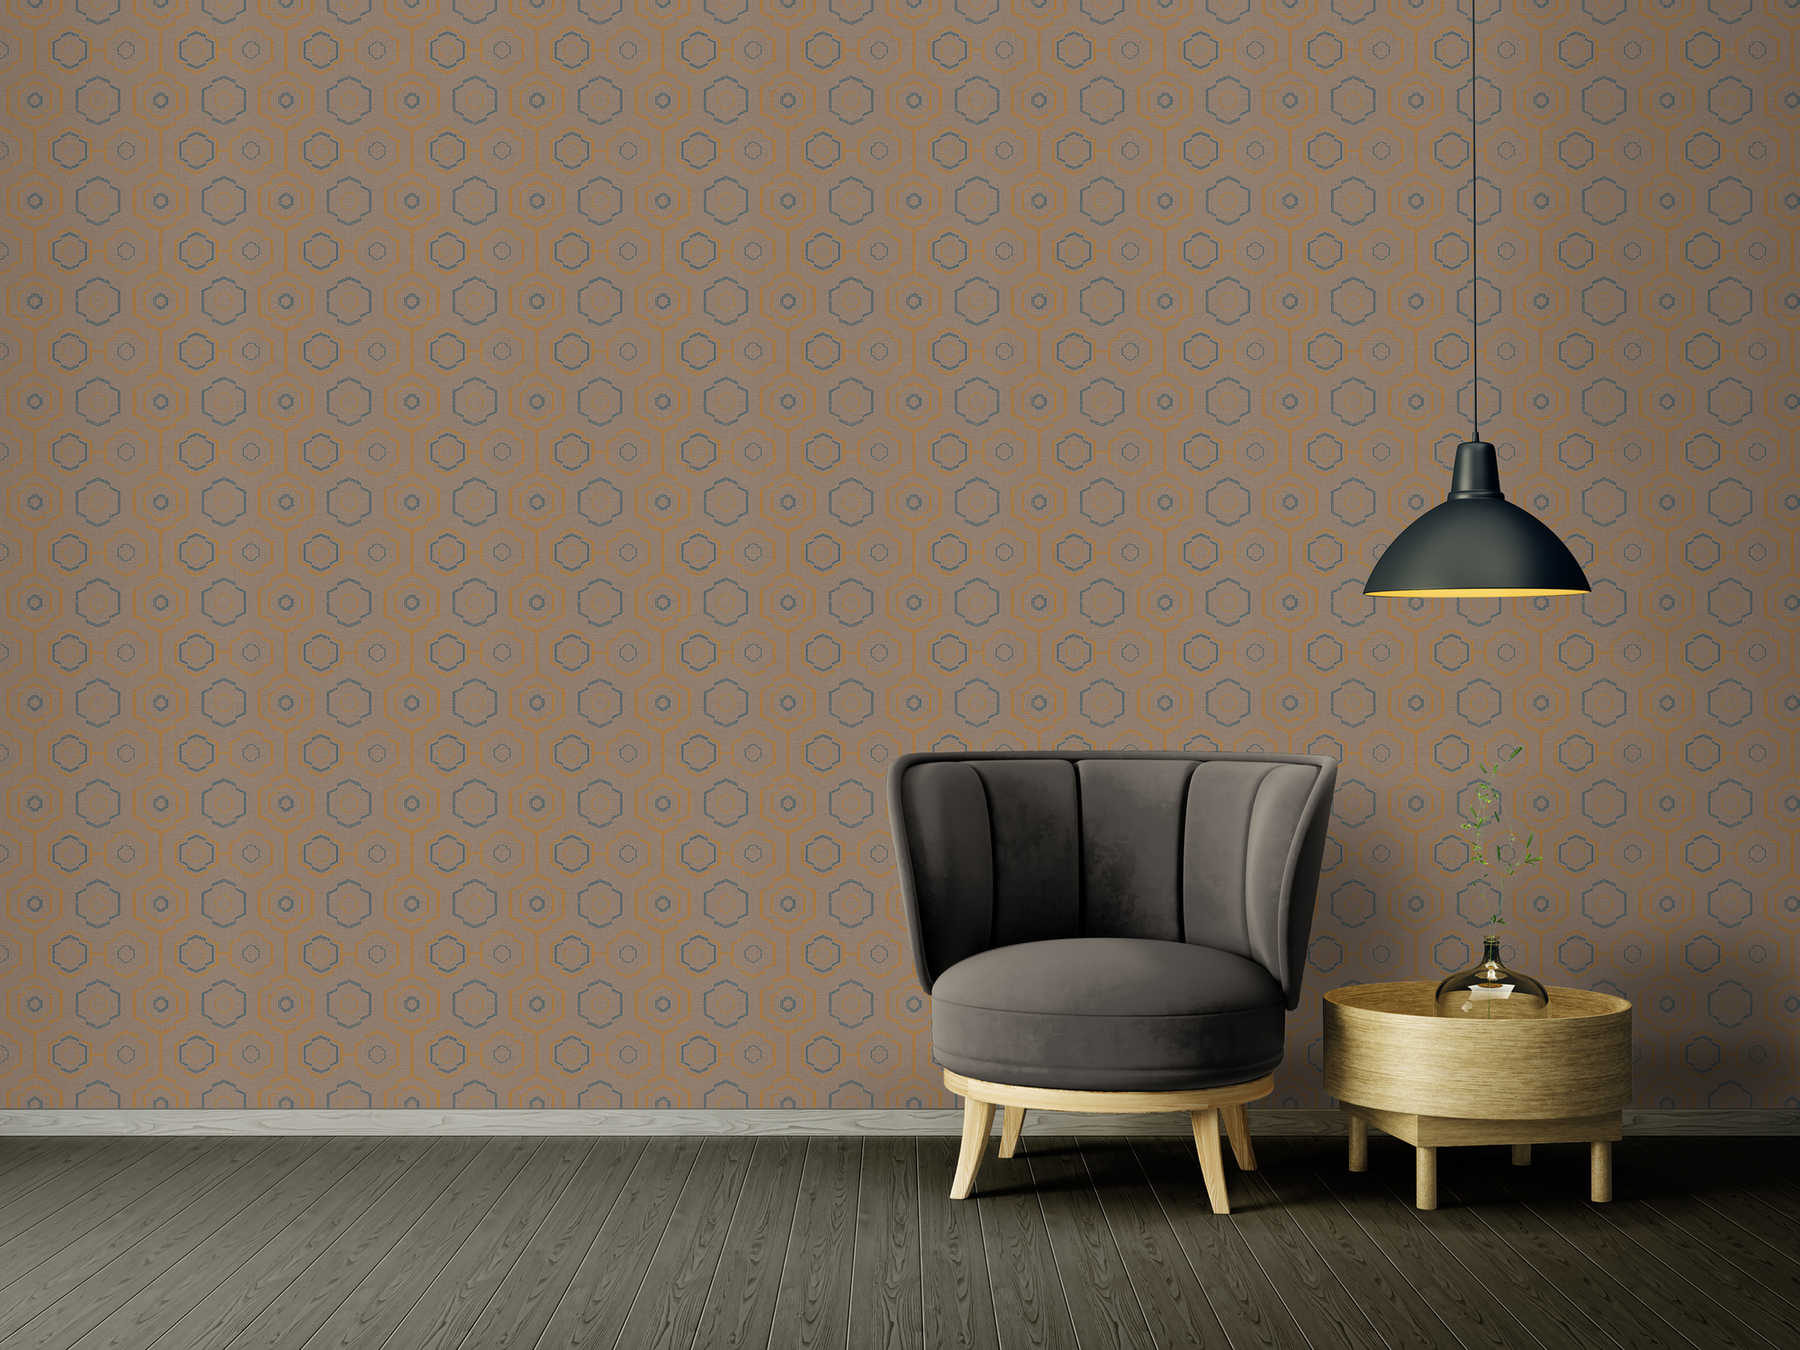             Wallpaper indigenous textile pattern with geometric design - brown, blue, orange
        